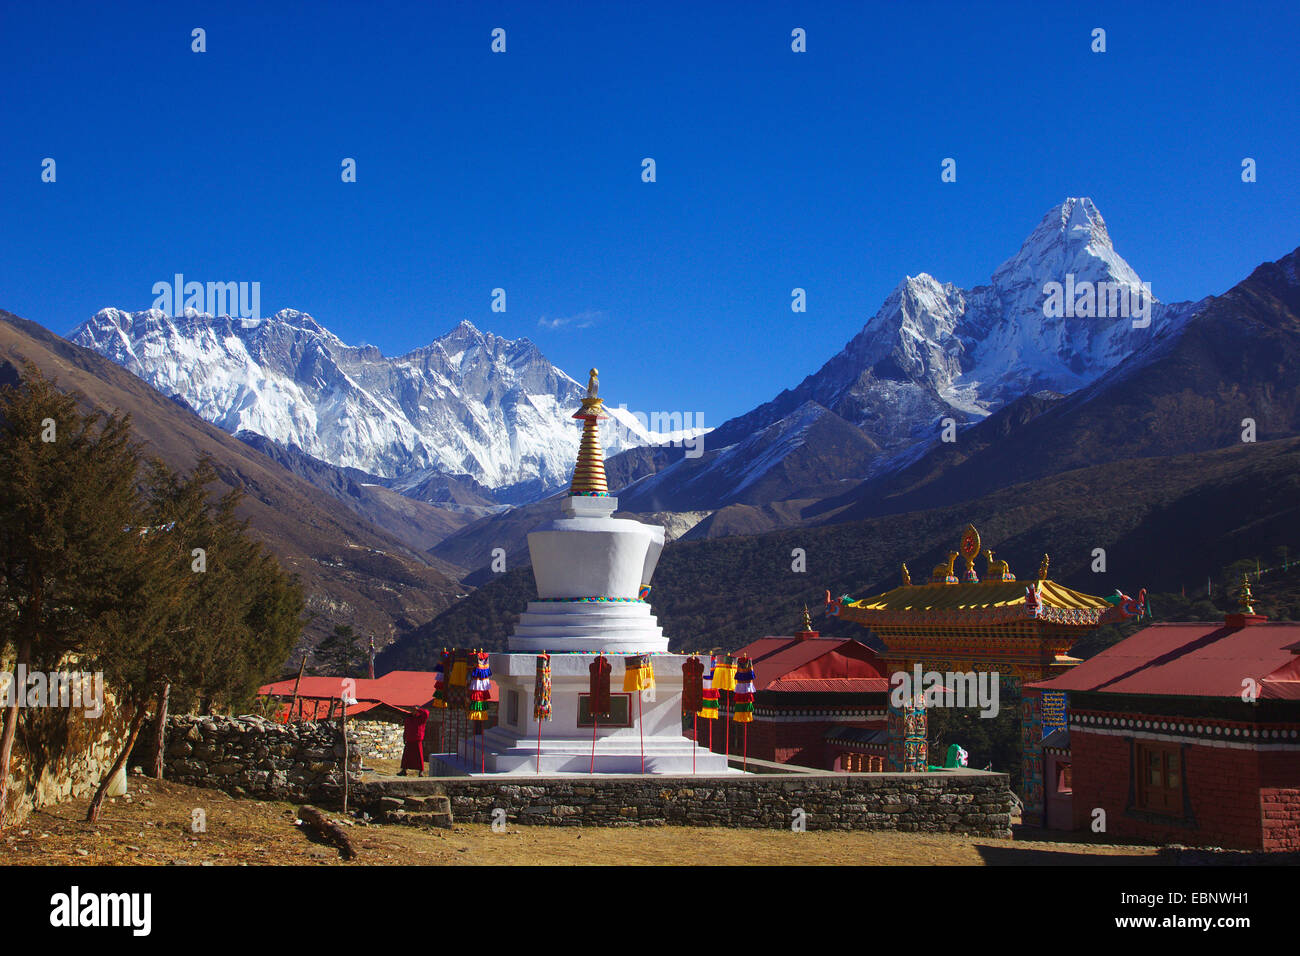 Sul Nuptse, Mount Everest (più alta montagna su erath) , sul Lhotse, Ama Dablam. Monastero di Tengboche, Nepal, Himalaya, Khumbu Himal Foto Stock